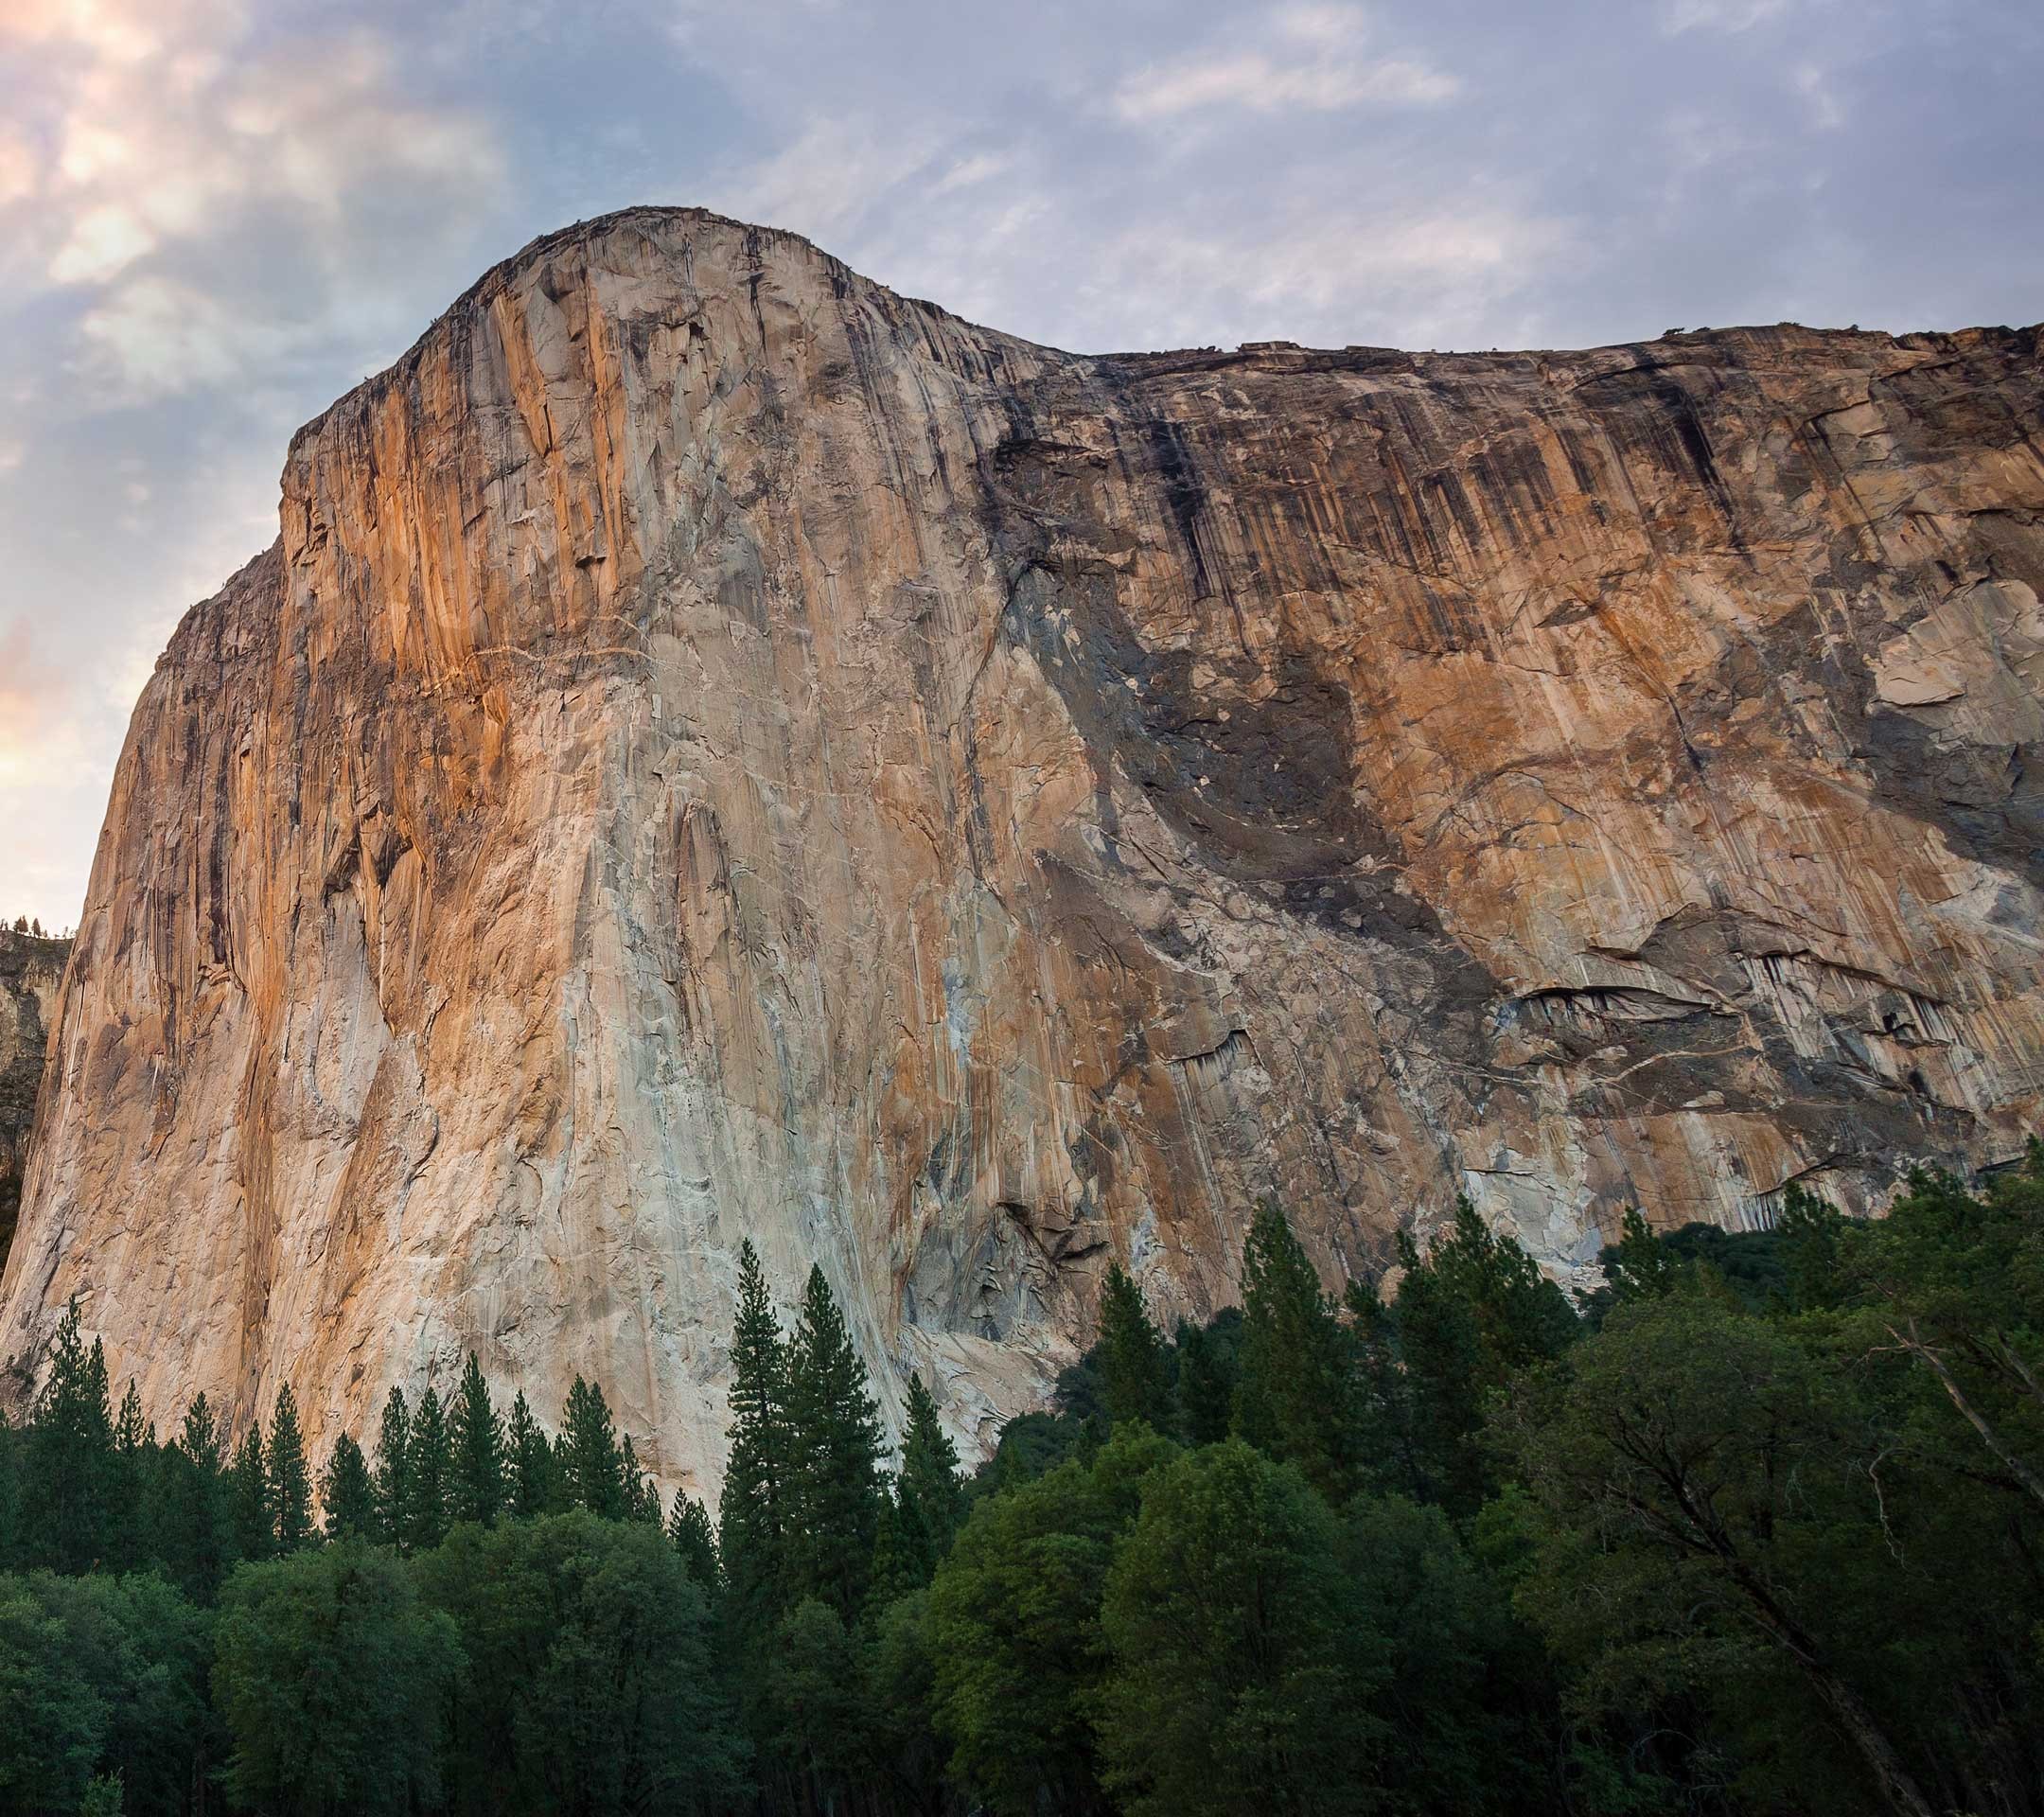 General 2160x1920 nature mountains Yosemite National Park trees cliff USA California El Capitan rocks rock formation